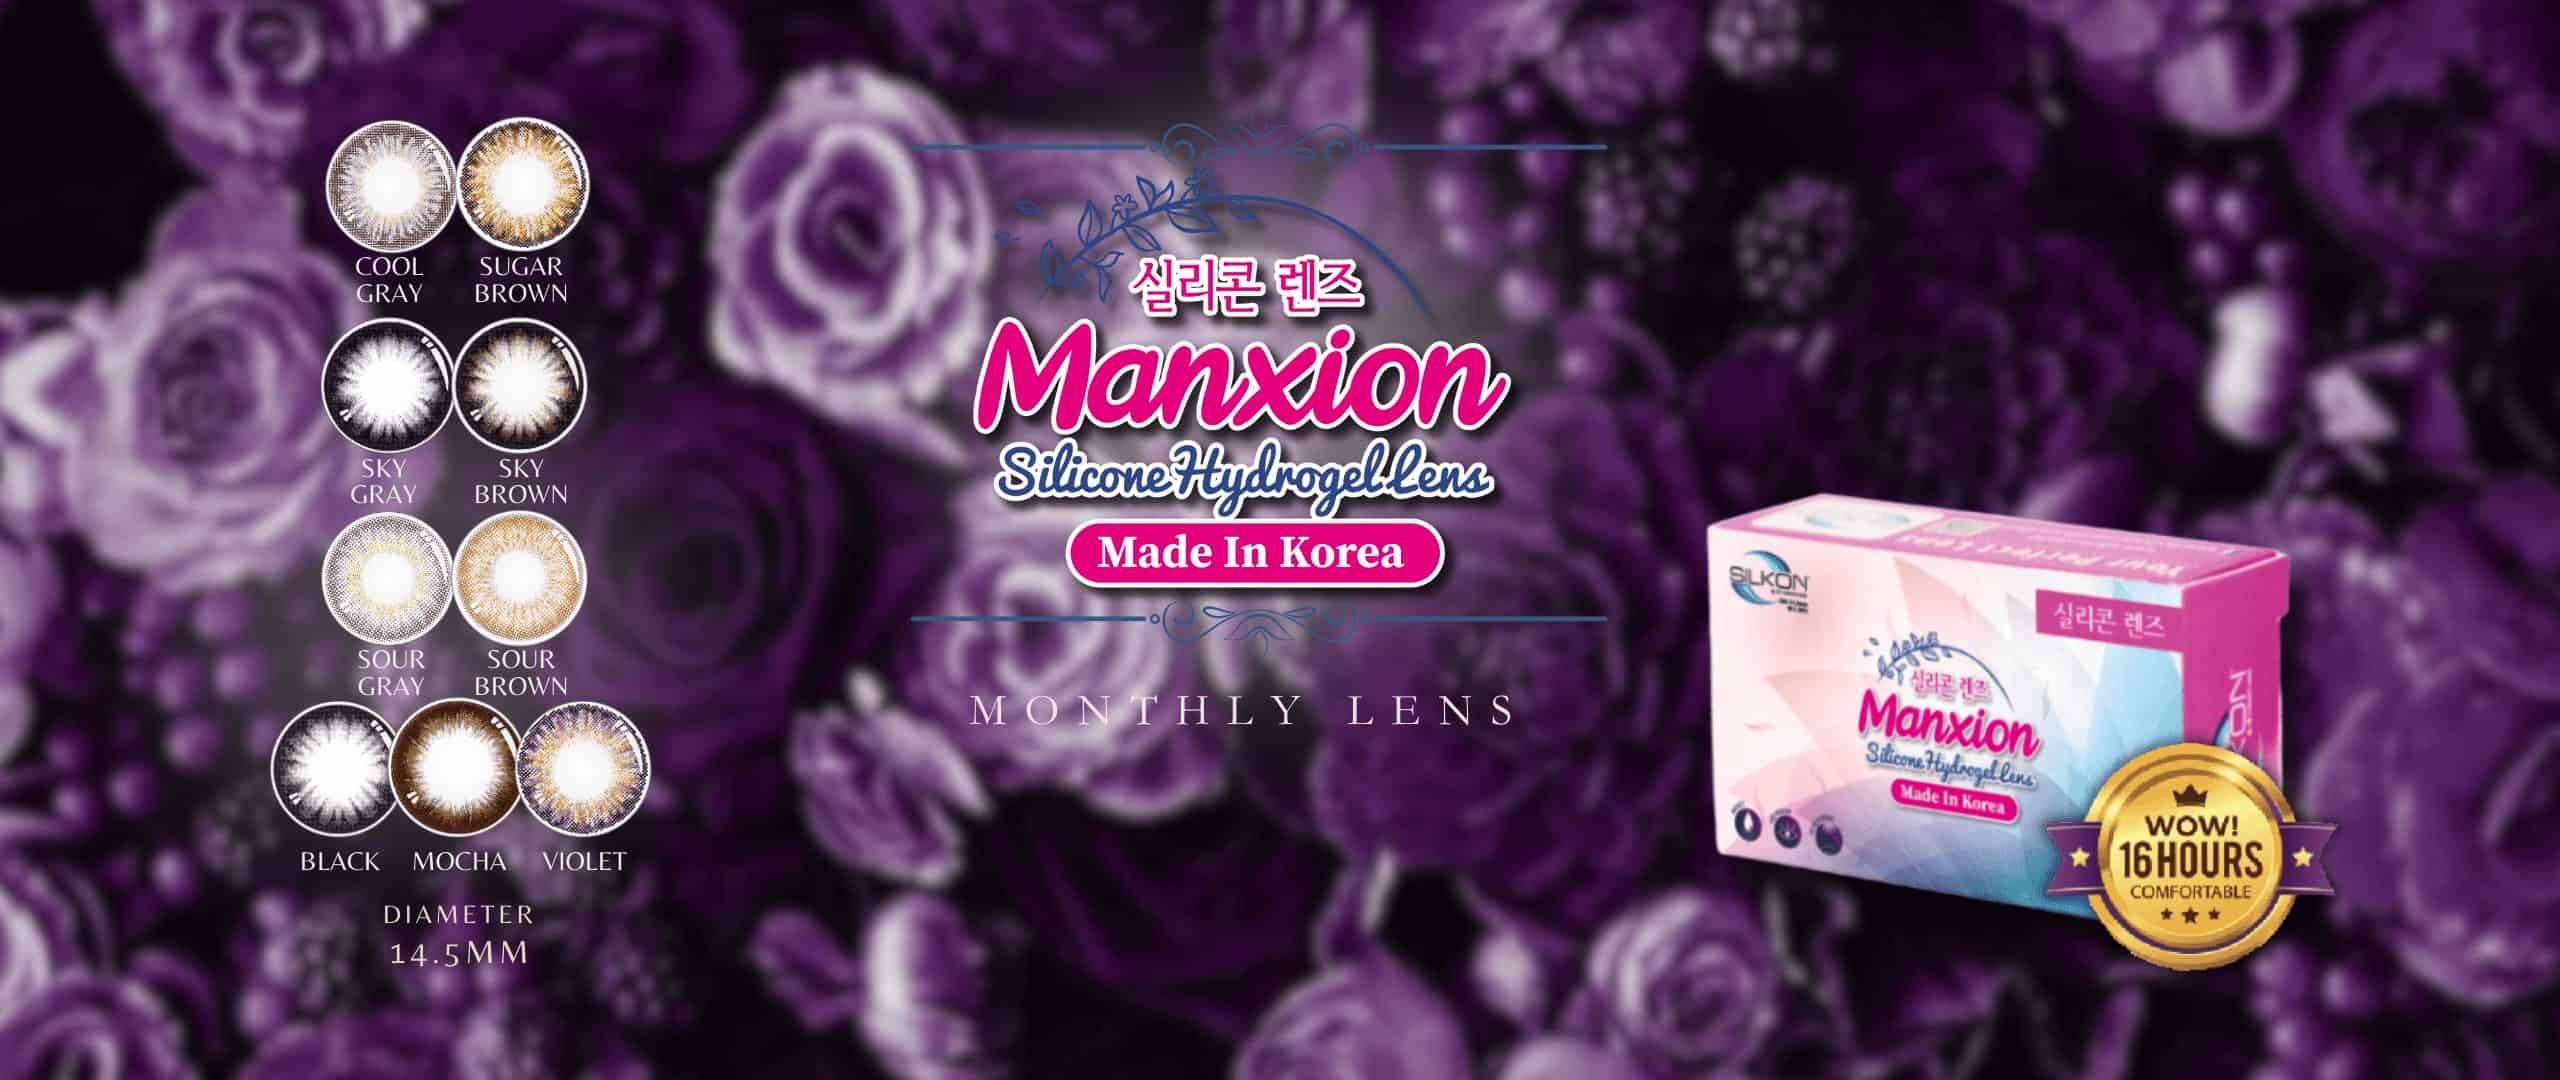 Manxion-home-banner